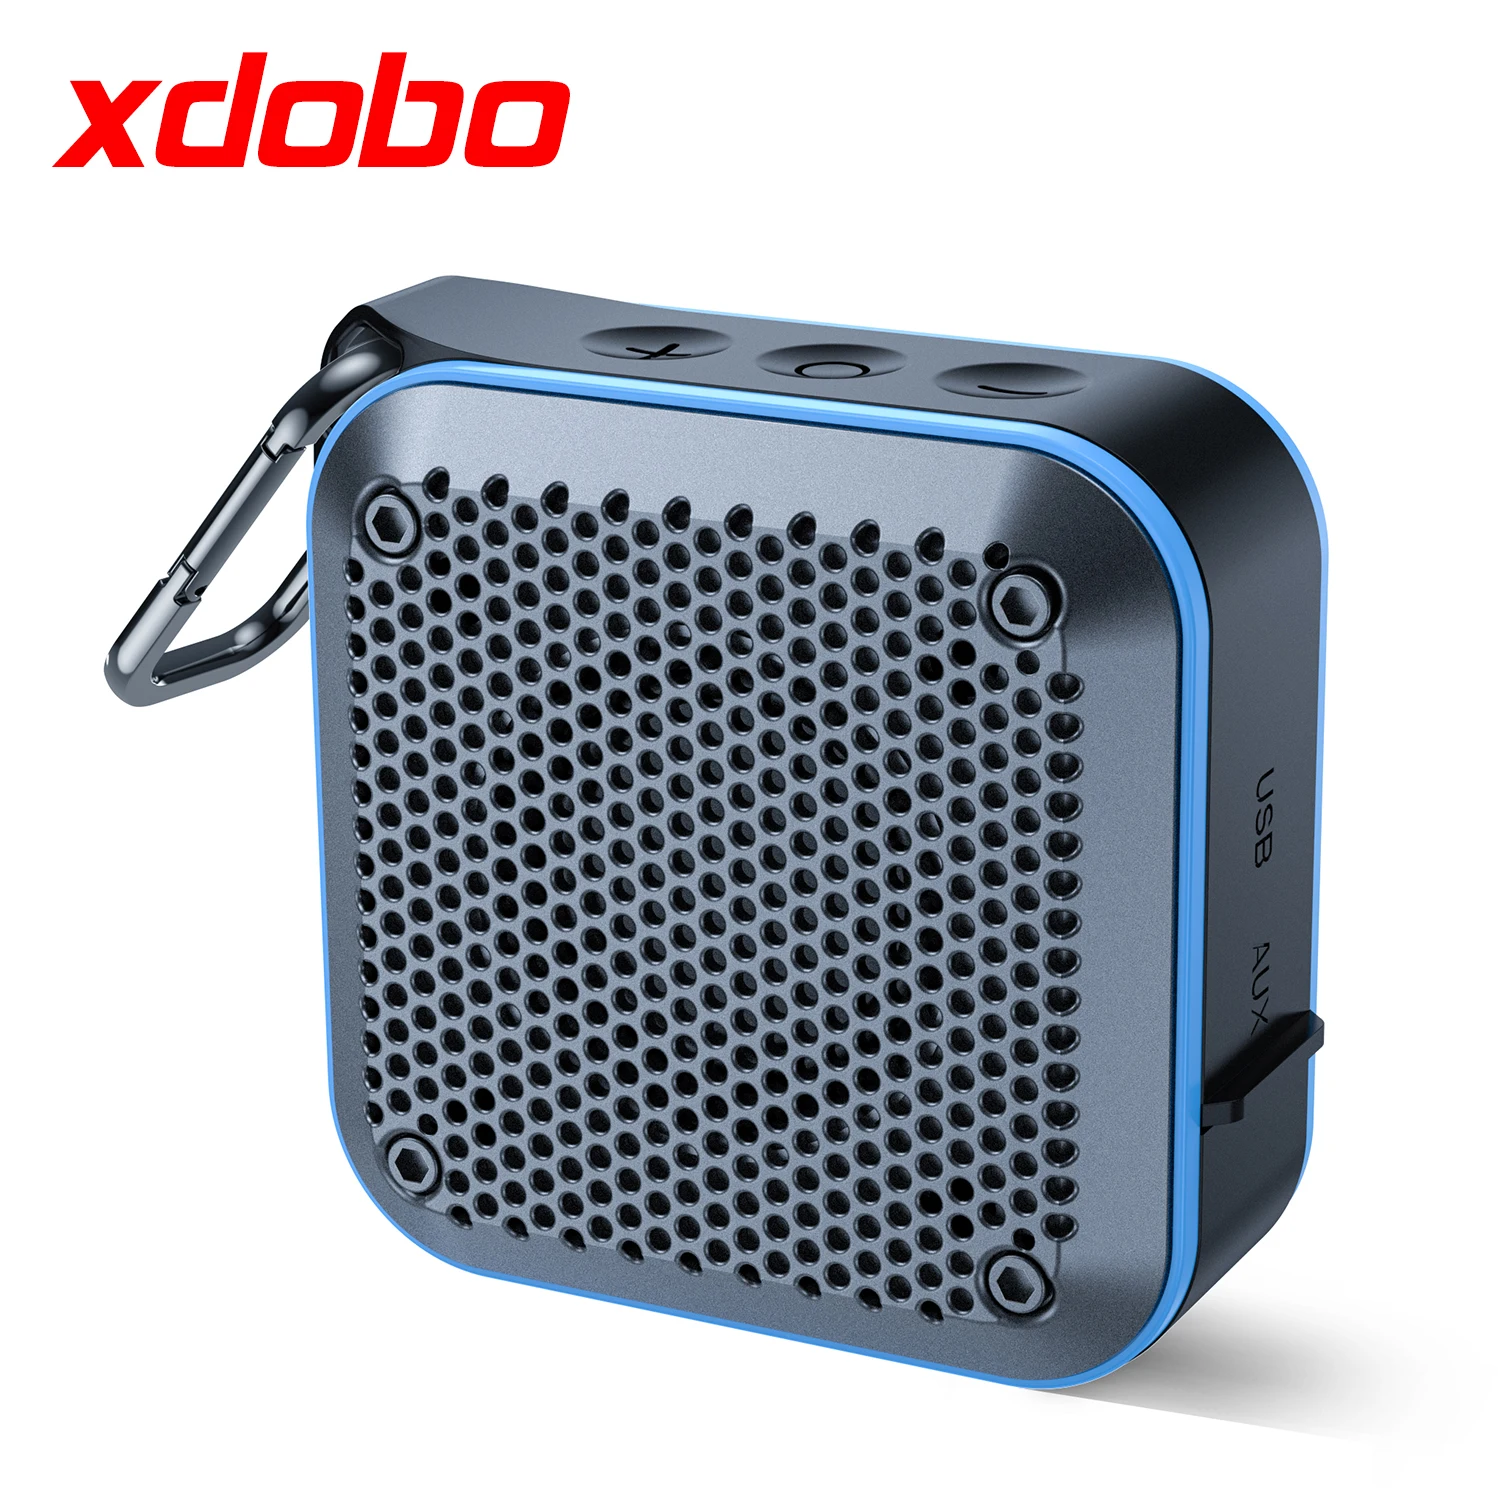 

2021 XDOBO Super Bass Wireless Waterproof Outdoor Power Bank Stereo Portable Speaker, Black,blue